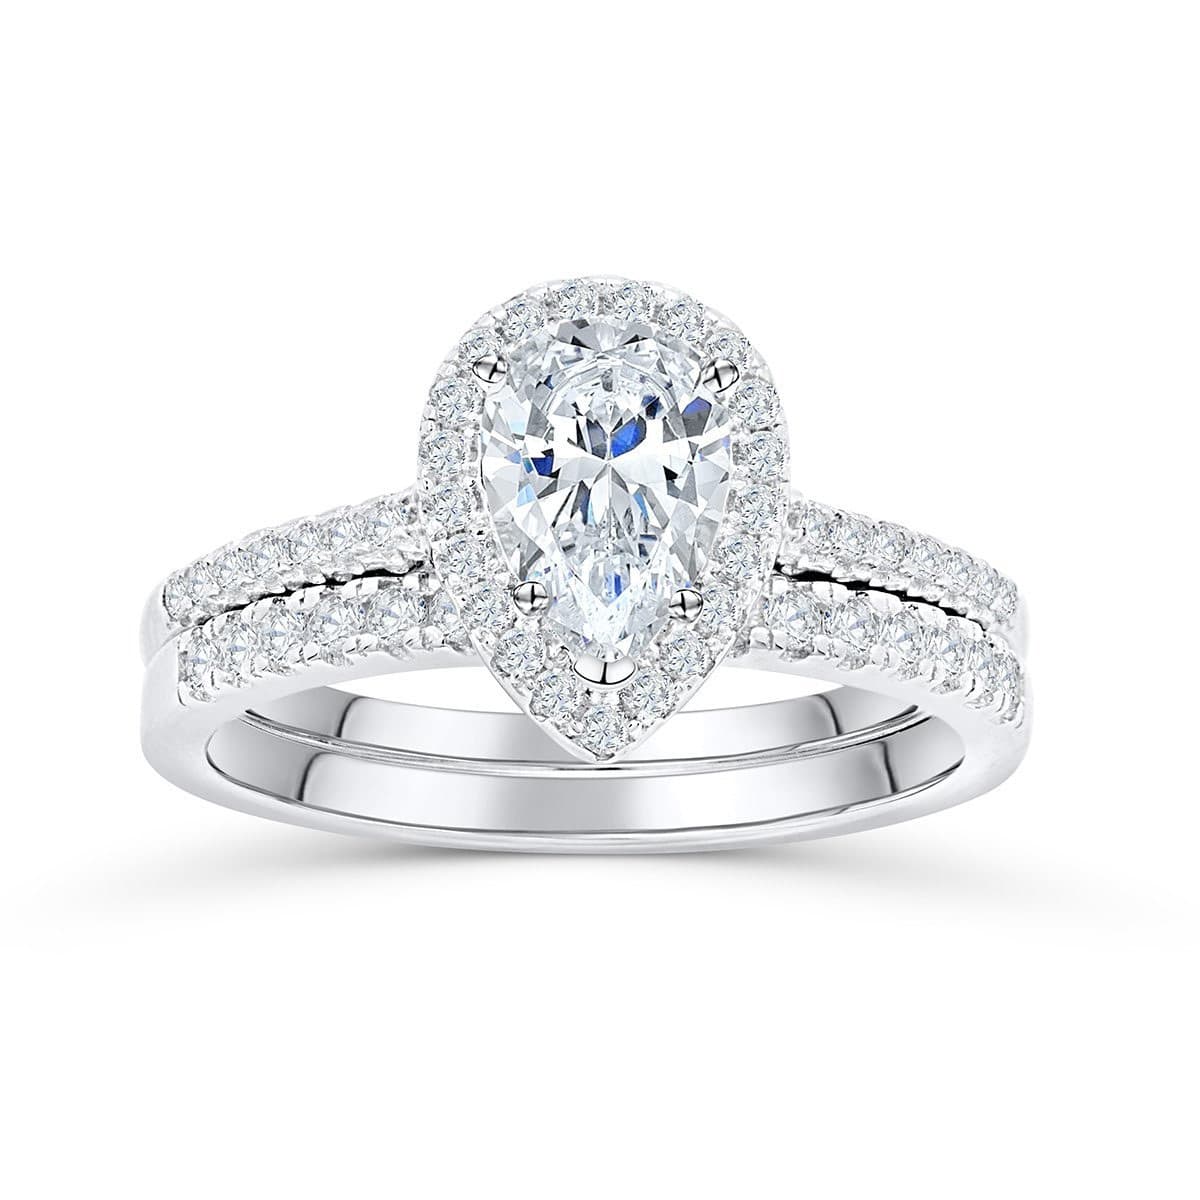 Buy 1 Carat Diamond Ring 100 Cent Diamond Gold Ring For Women VVS1 D Diamond  Stone Original Certified By IGL Lab 1 Ct Diamond Ring American Diamond Ring  डायमंड रिंग Emerald Cut